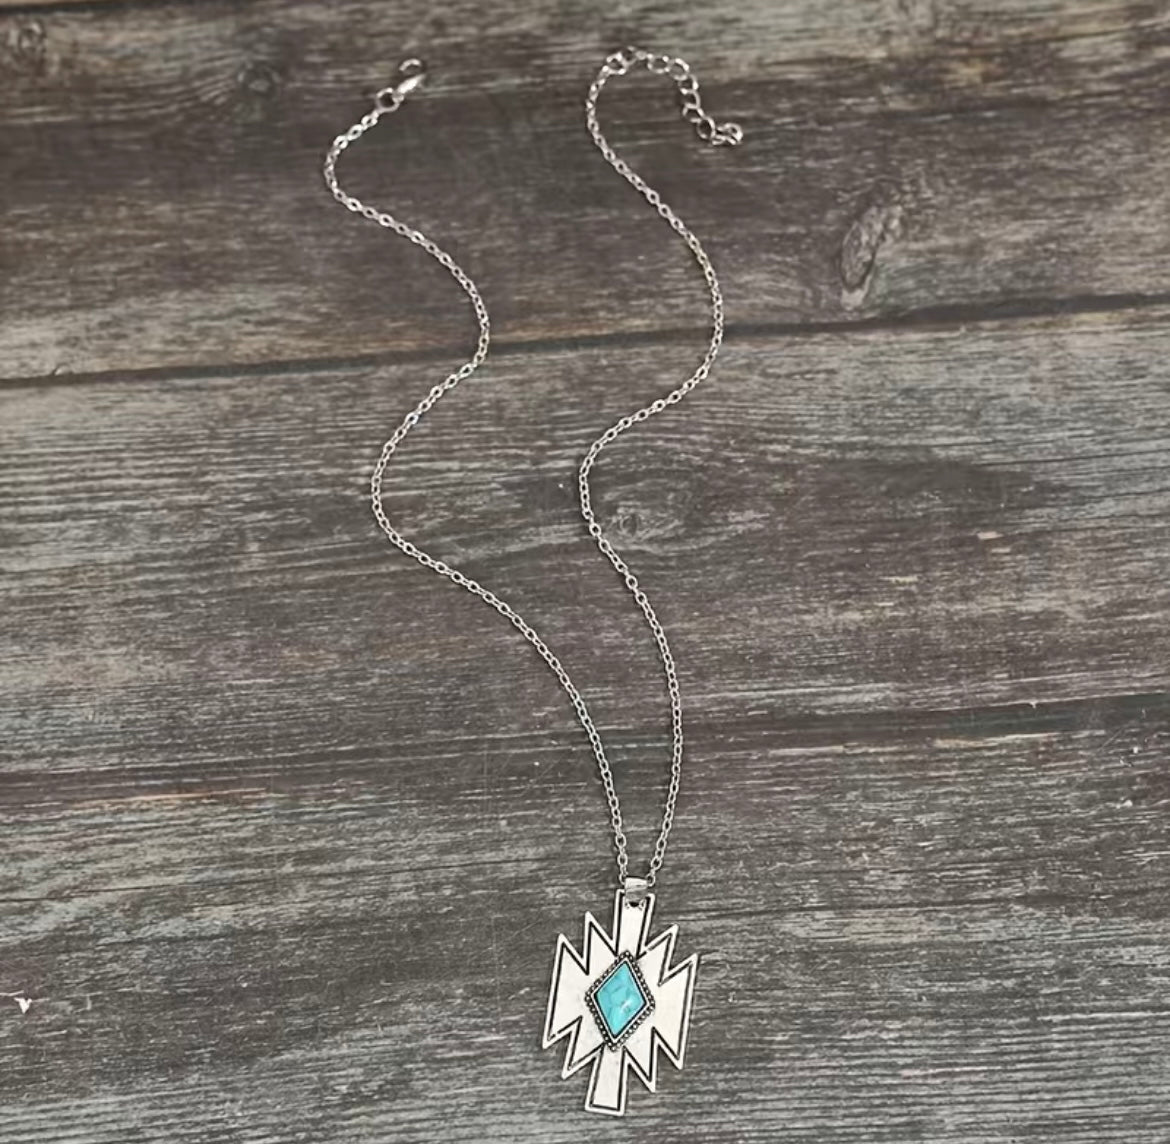 Vintage Turquoise Stone Necklace